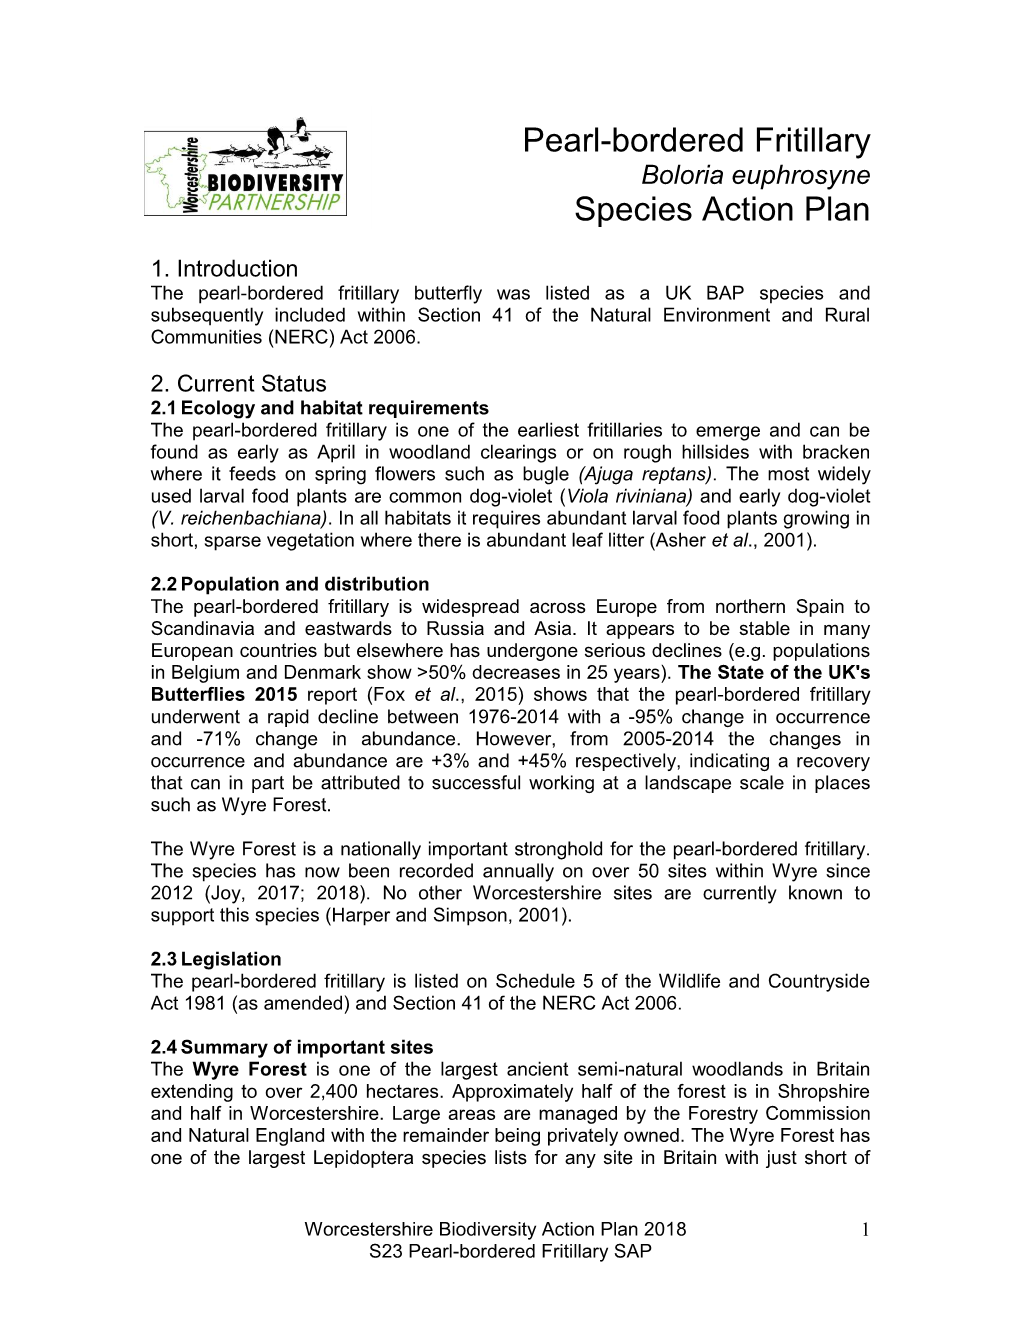 Pearl-Bordered Fritillary Boloria Euphrosyne Species Action Plan